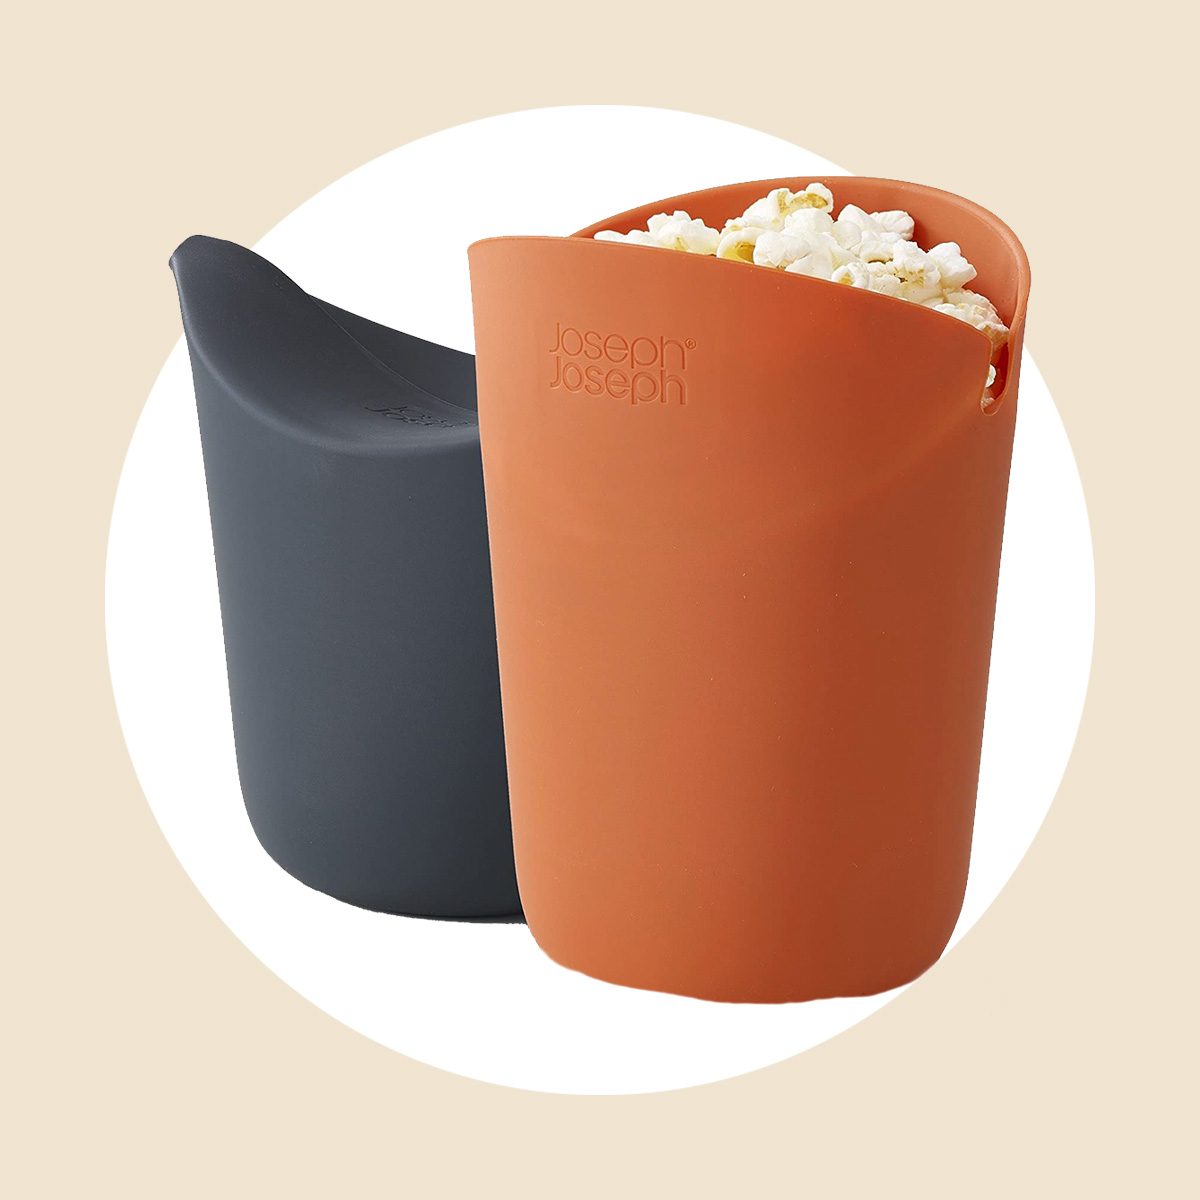 https://www.tasteofhome.com/wp-content/uploads/2022/02/joseph-joseph-m-cuisine-microwave-popcorn-popper-via-amazon.com-ecomm.jpg?fit=700%2C700